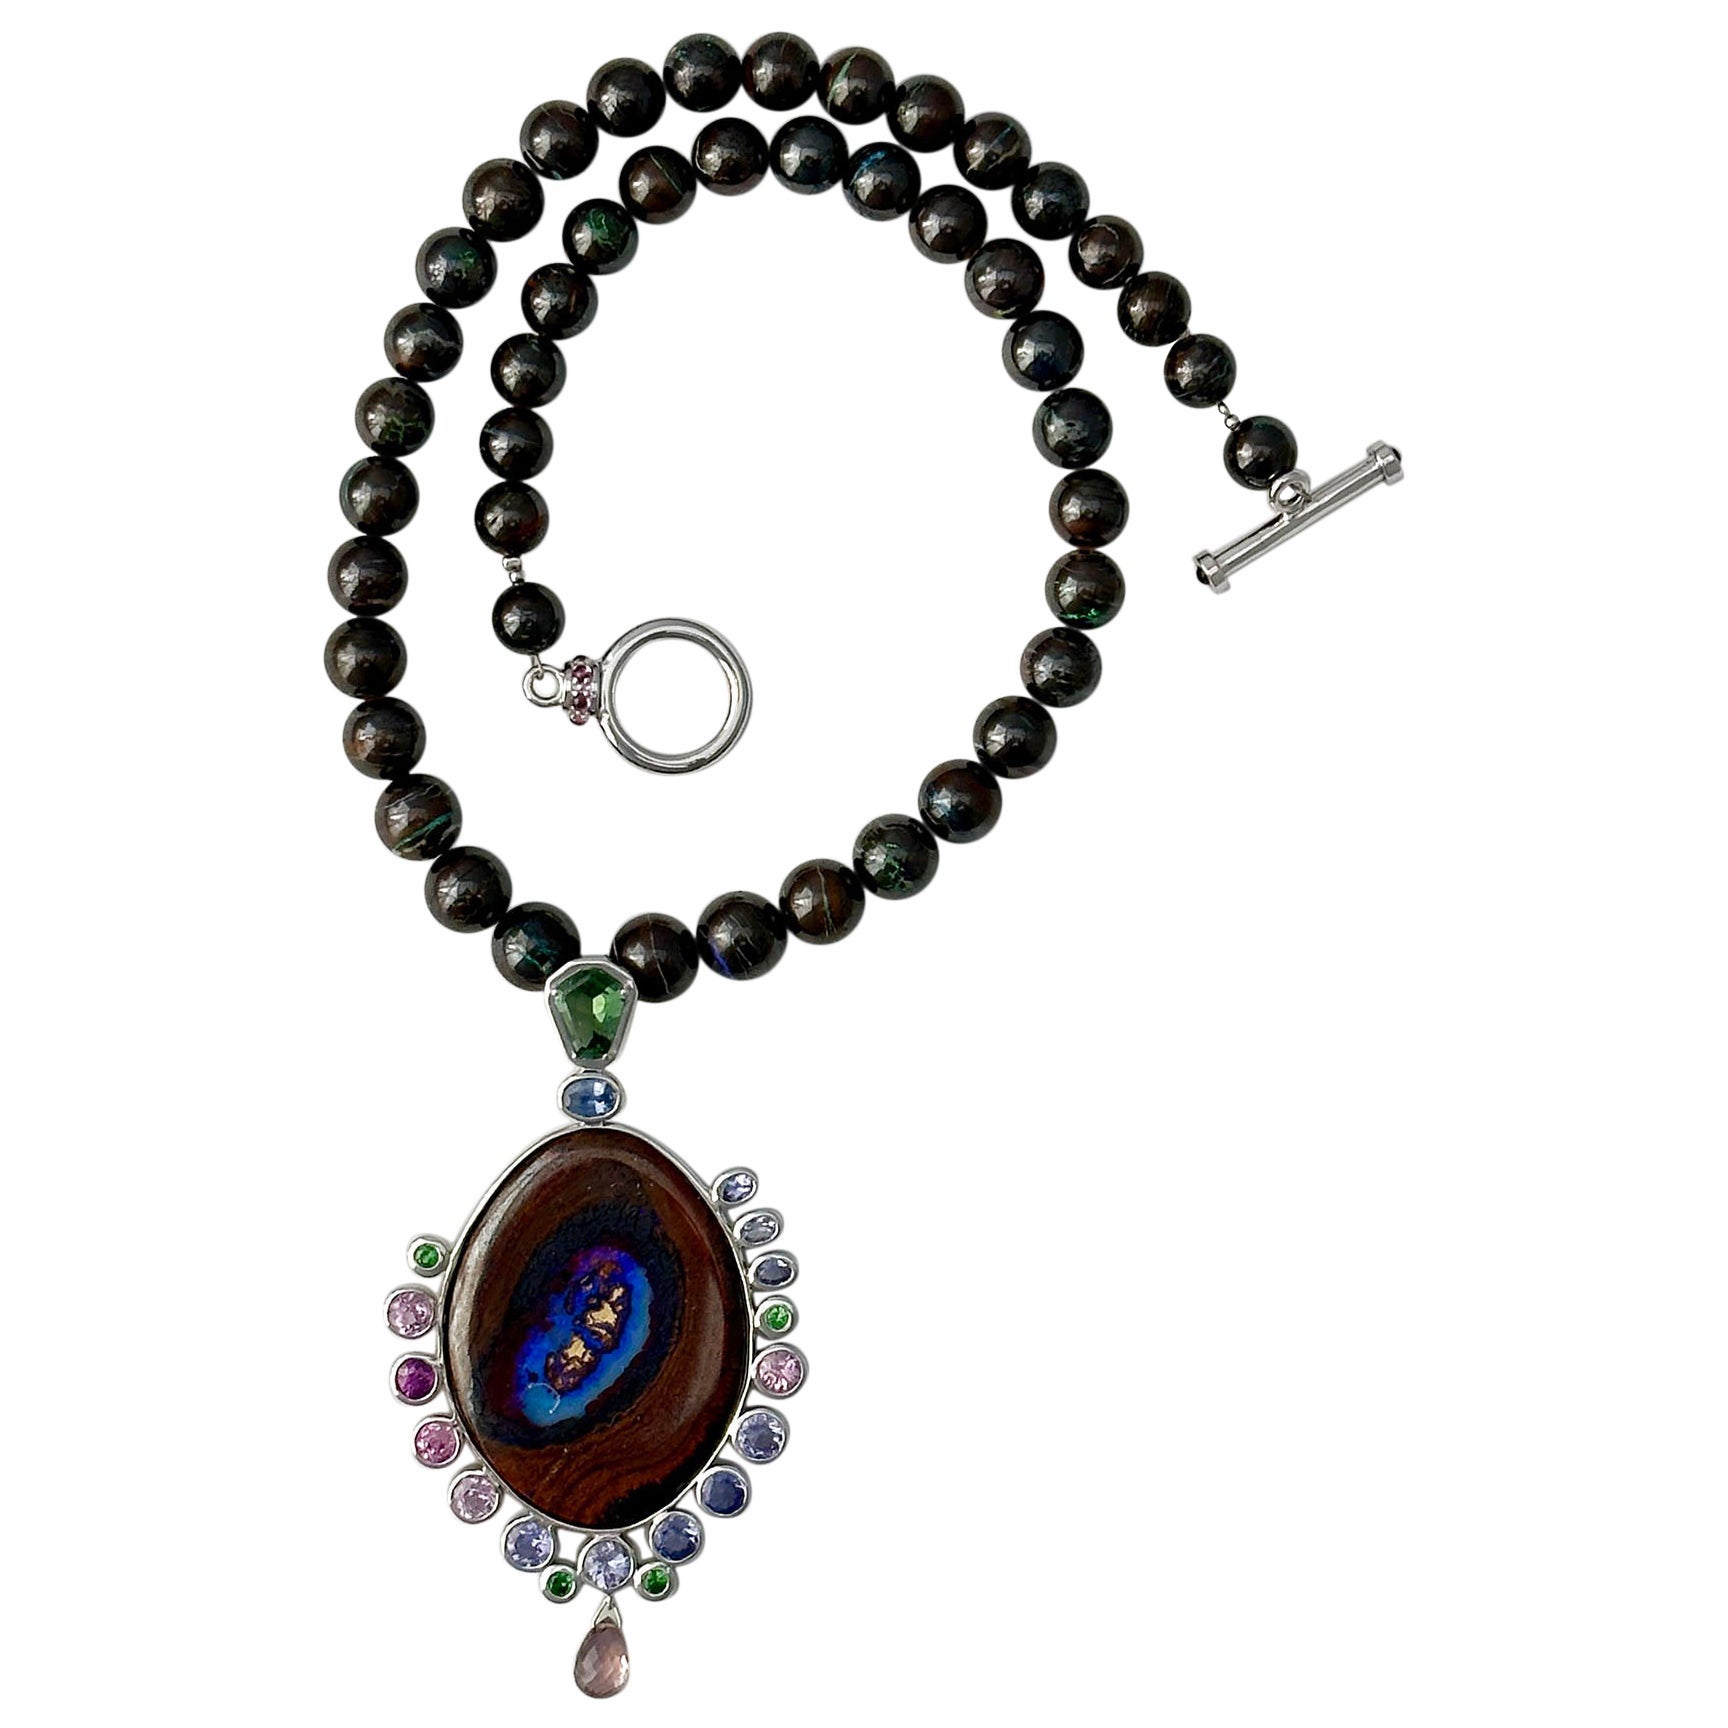 An Australian Boulder Opal Necklace & Pendant set with Tourmaline, Tanzanite